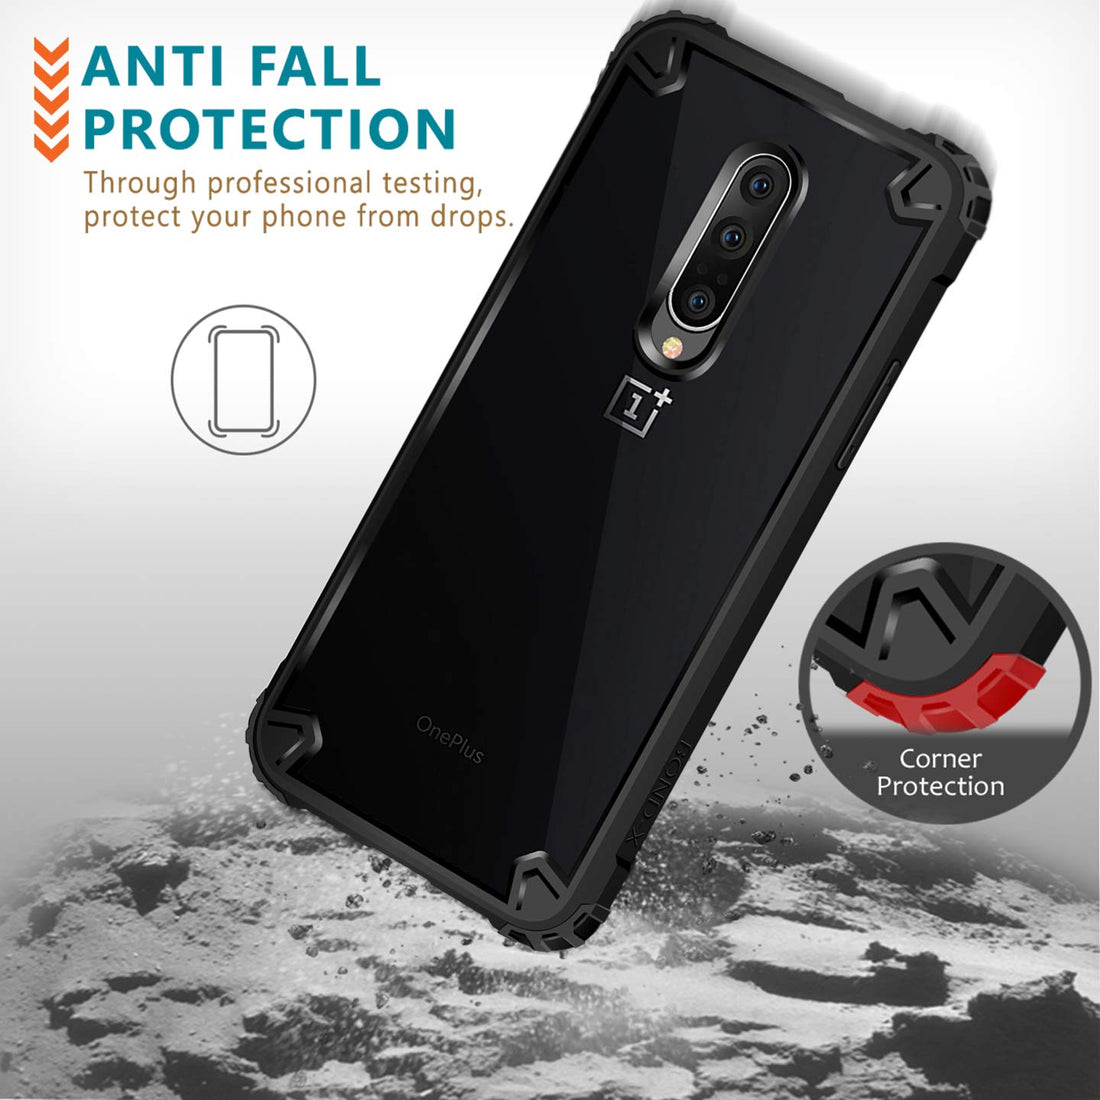 OnePlus 7 Pro/One Plus 7 Pro Back Cover Case | Impulse - Black